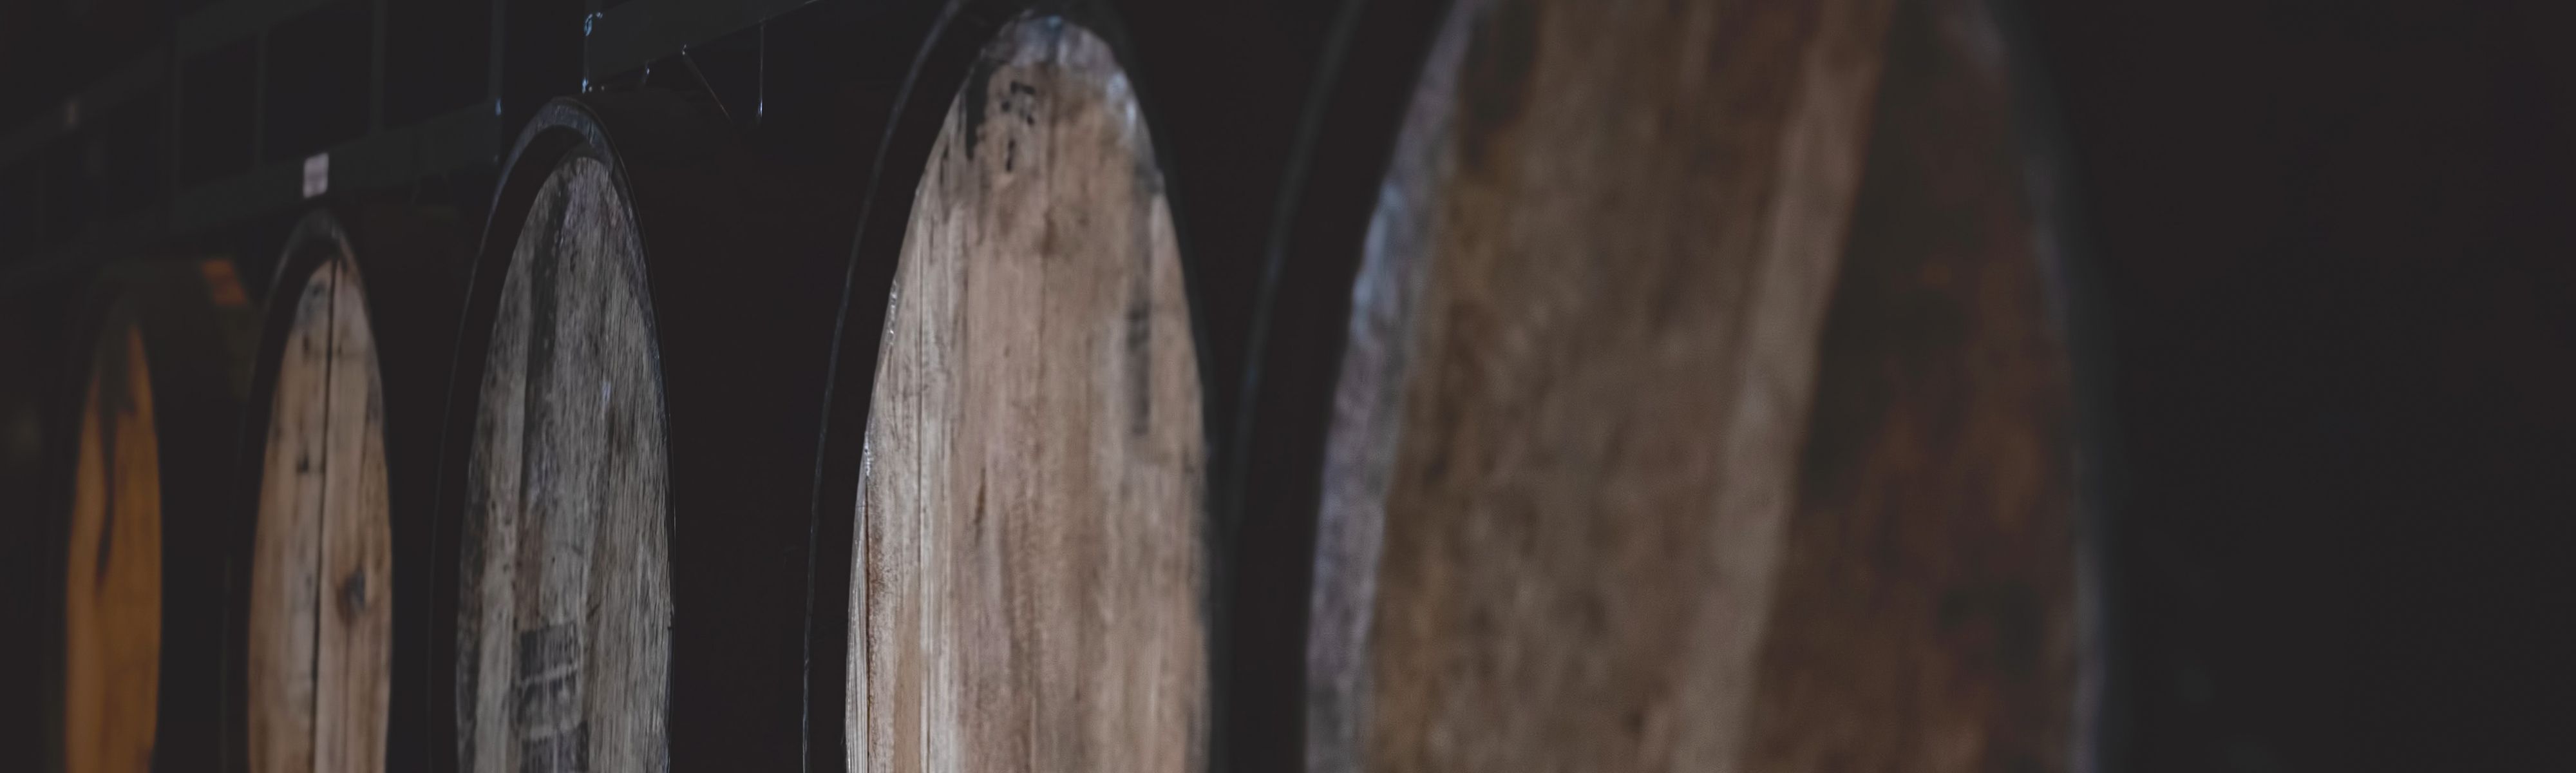 whisky barrels lined up in distillery